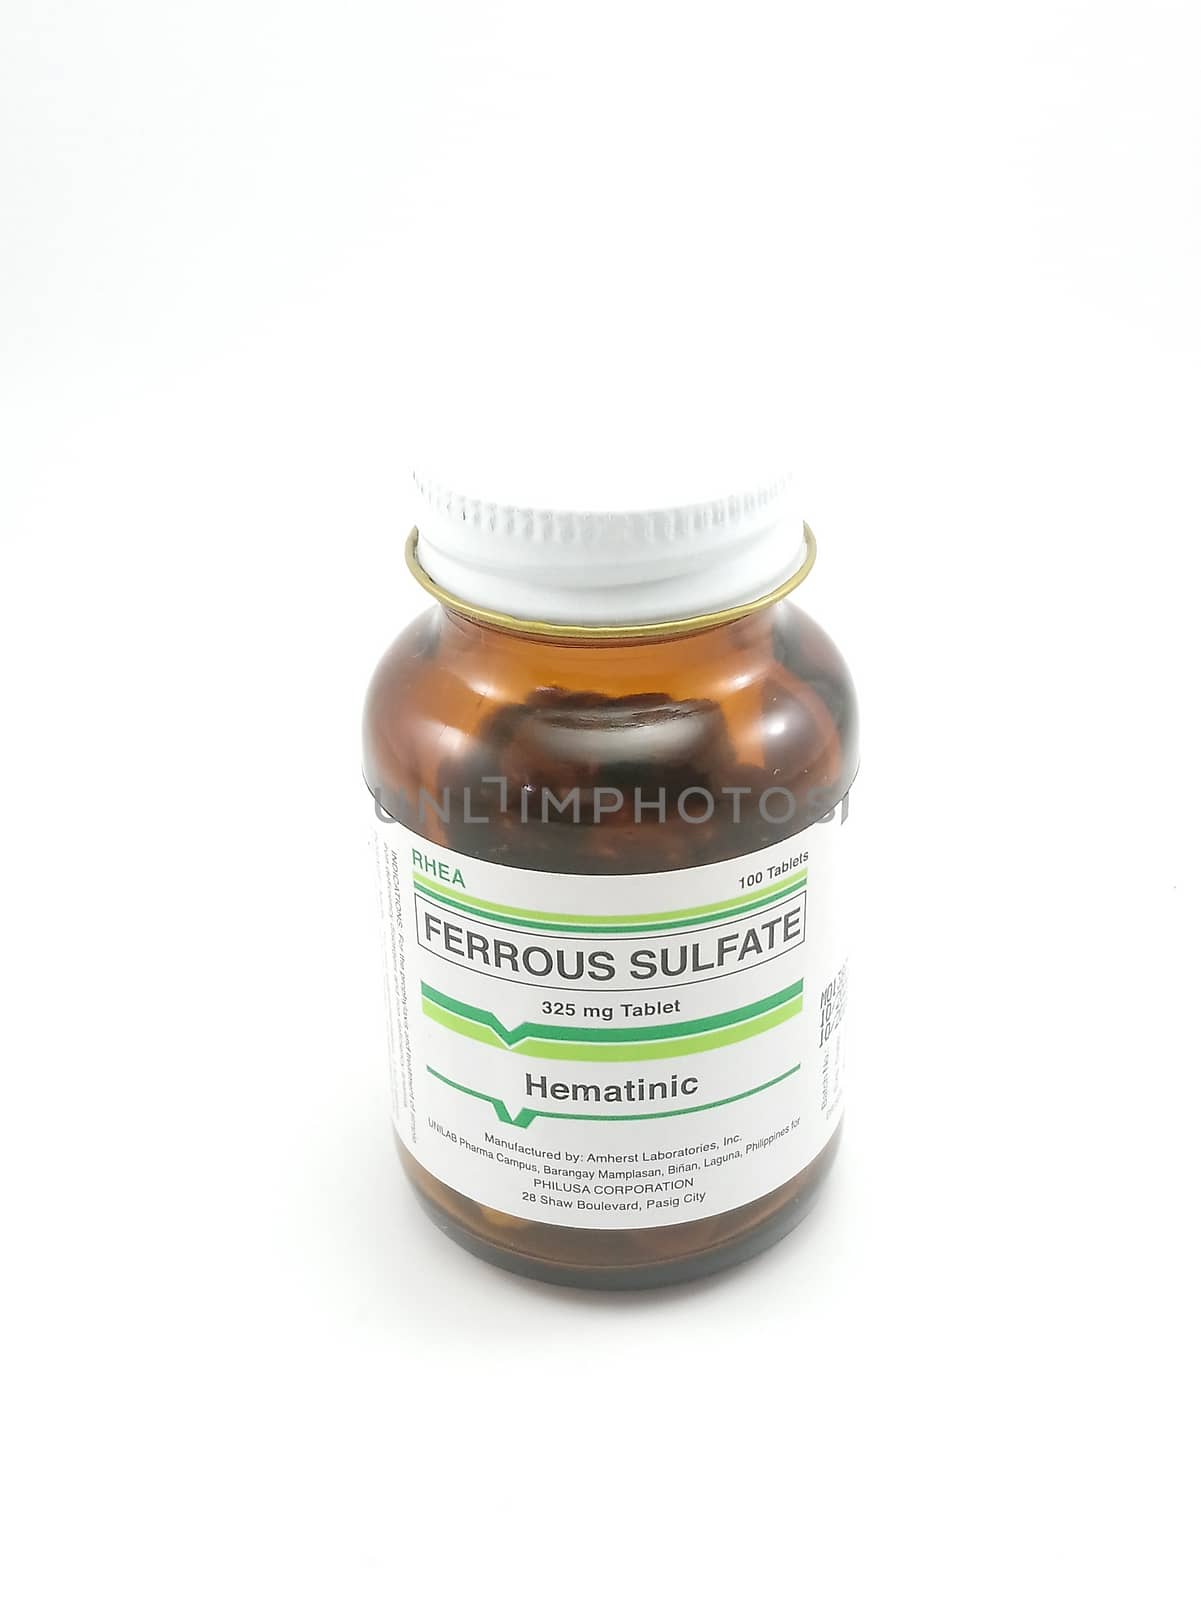 MANILA, PH - SEPT 24 - Rhea Ferrous sulfate hermatinic on September 24, 2020 in Manila, Philippines.